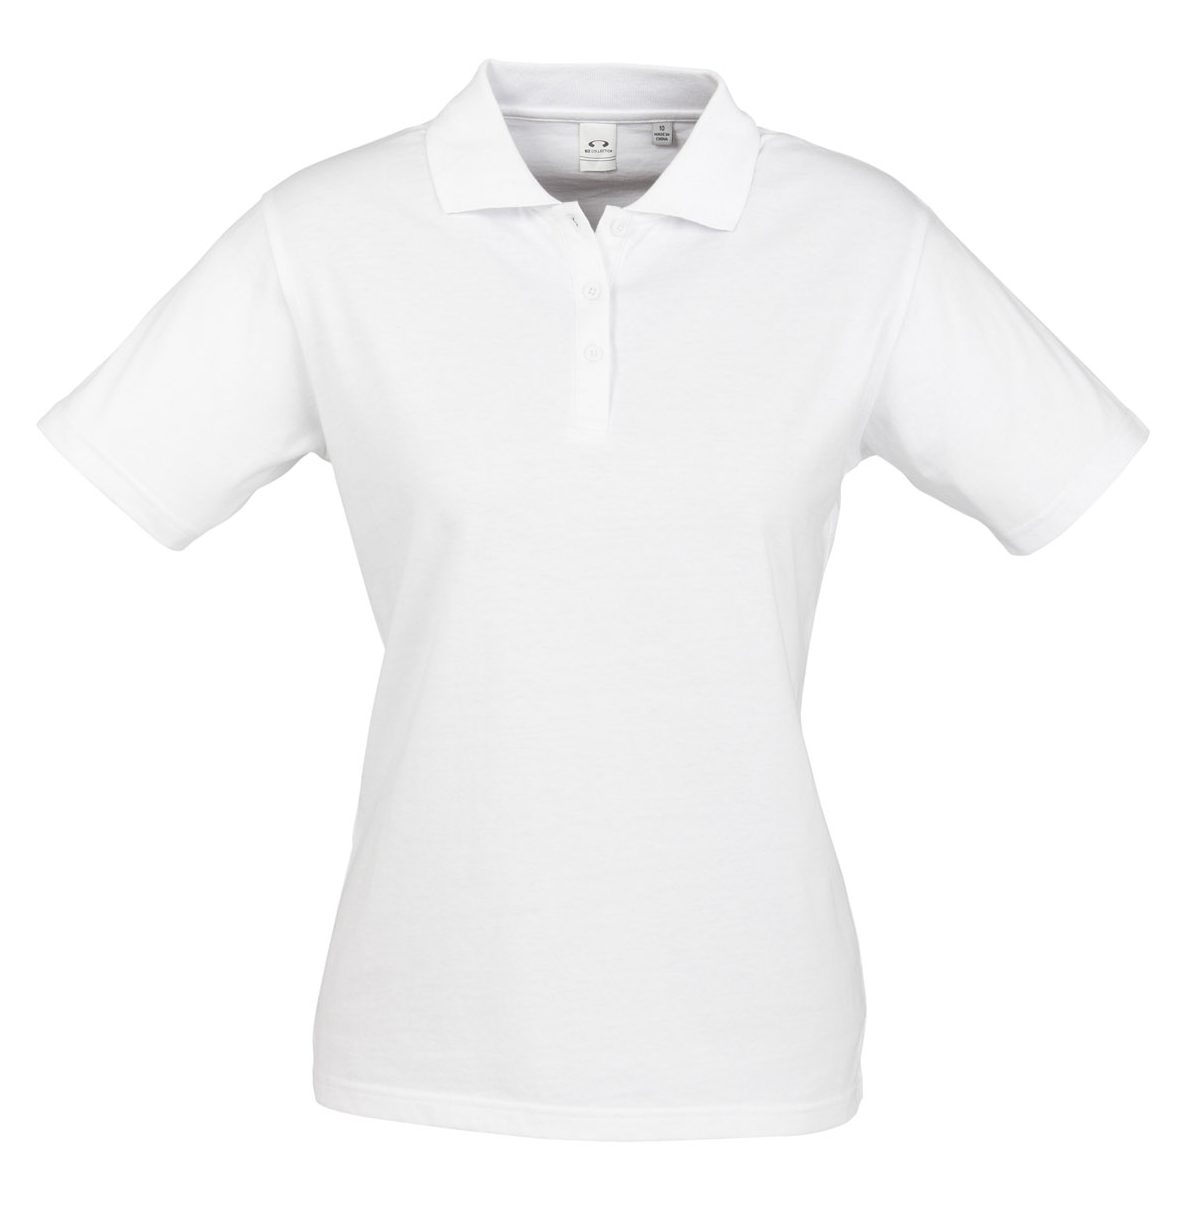 Women's Ice Polo T-Shirts - White | The Uniform Edit